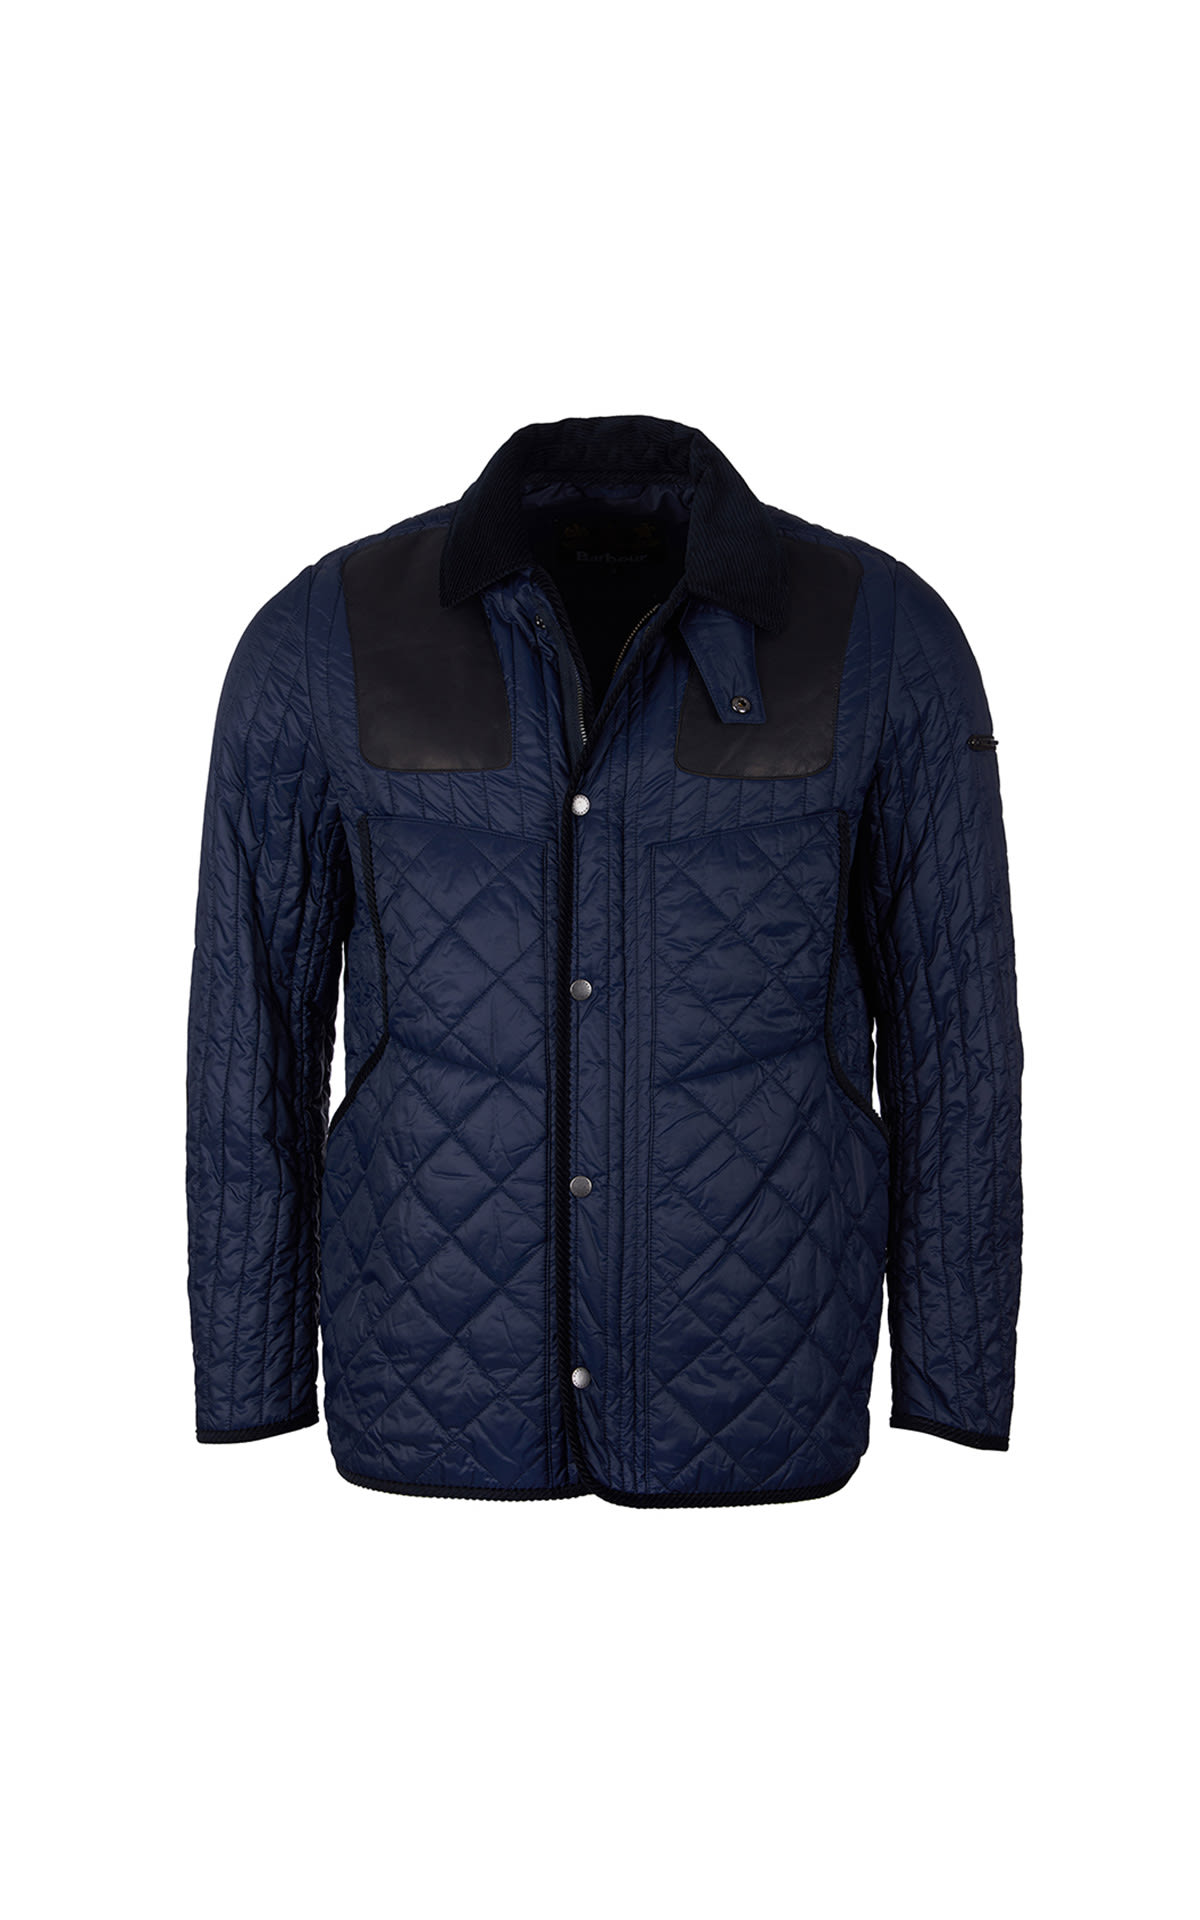 Men's navy blue jacket Barbour